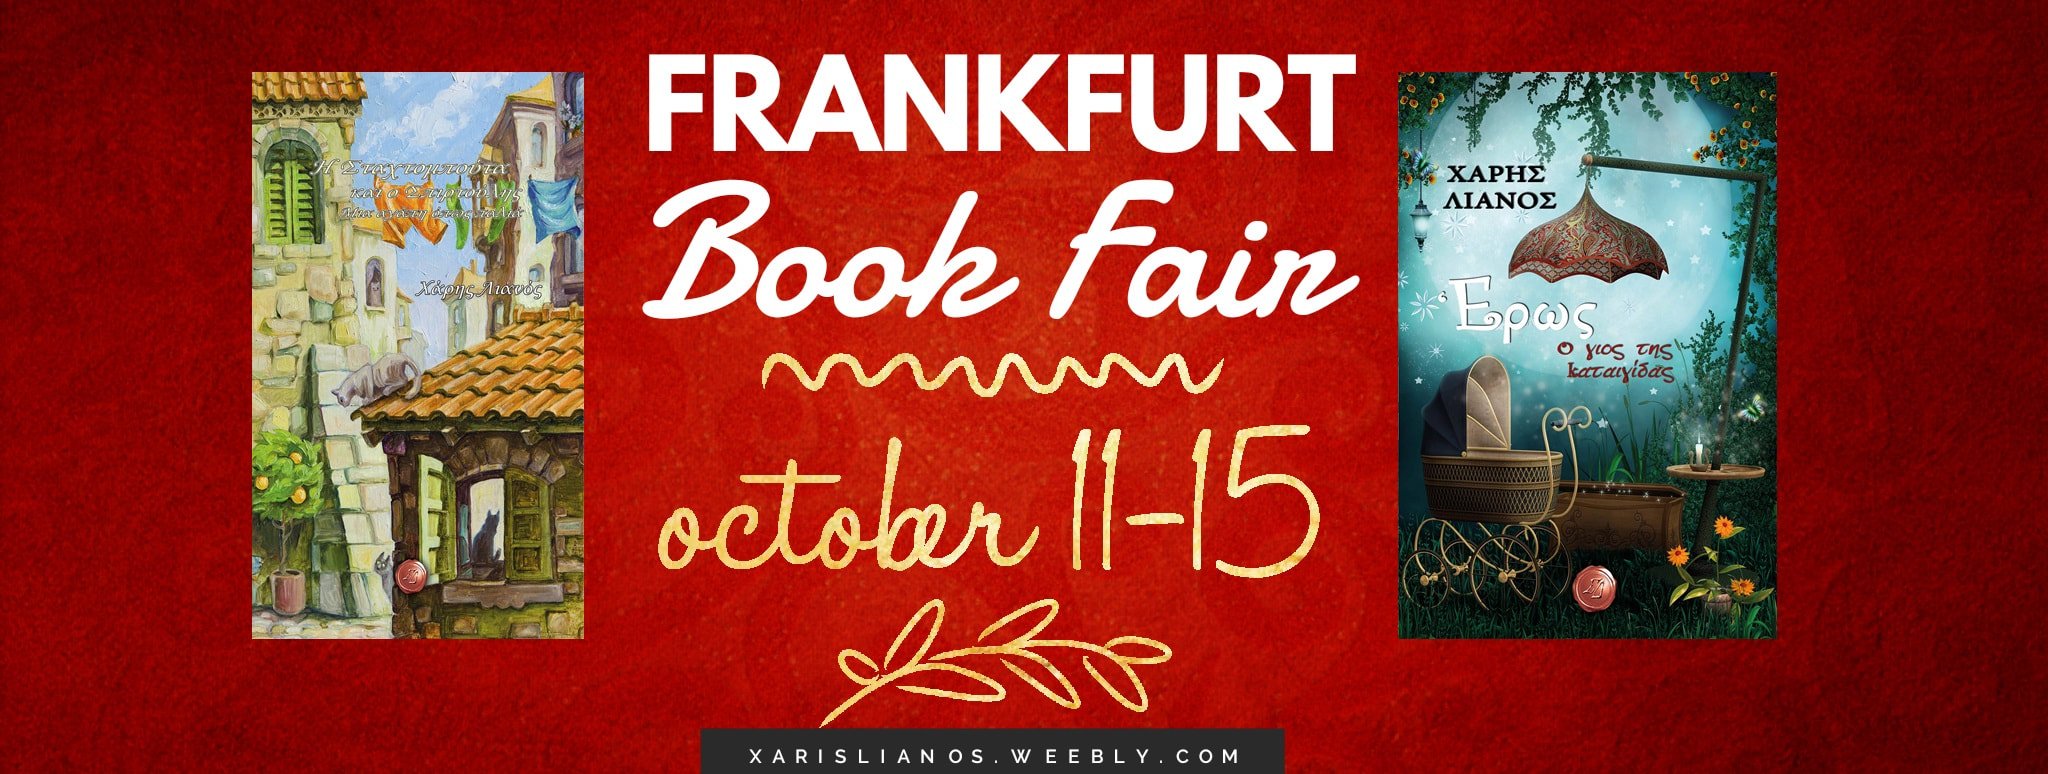 Frankfurt Book Fair October 11-15 2017 Xaris Lianos